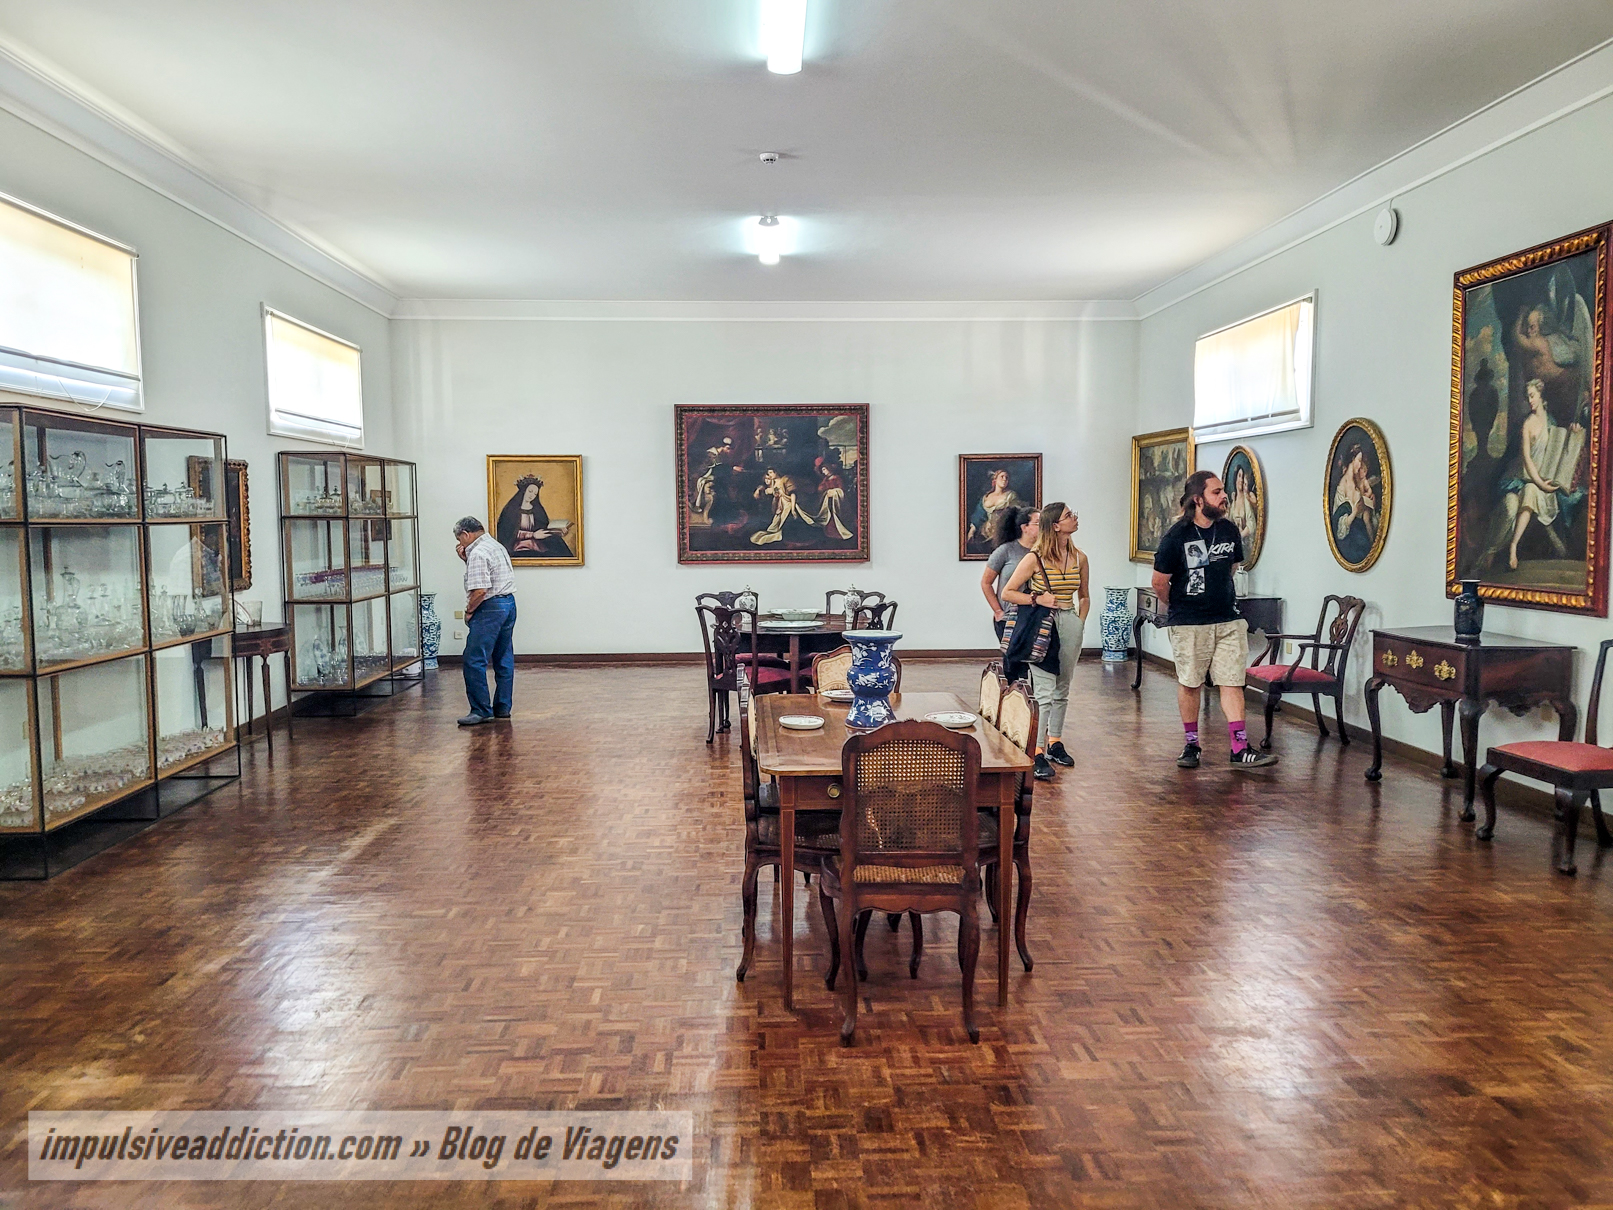 Casa-Museu Egas Moniz